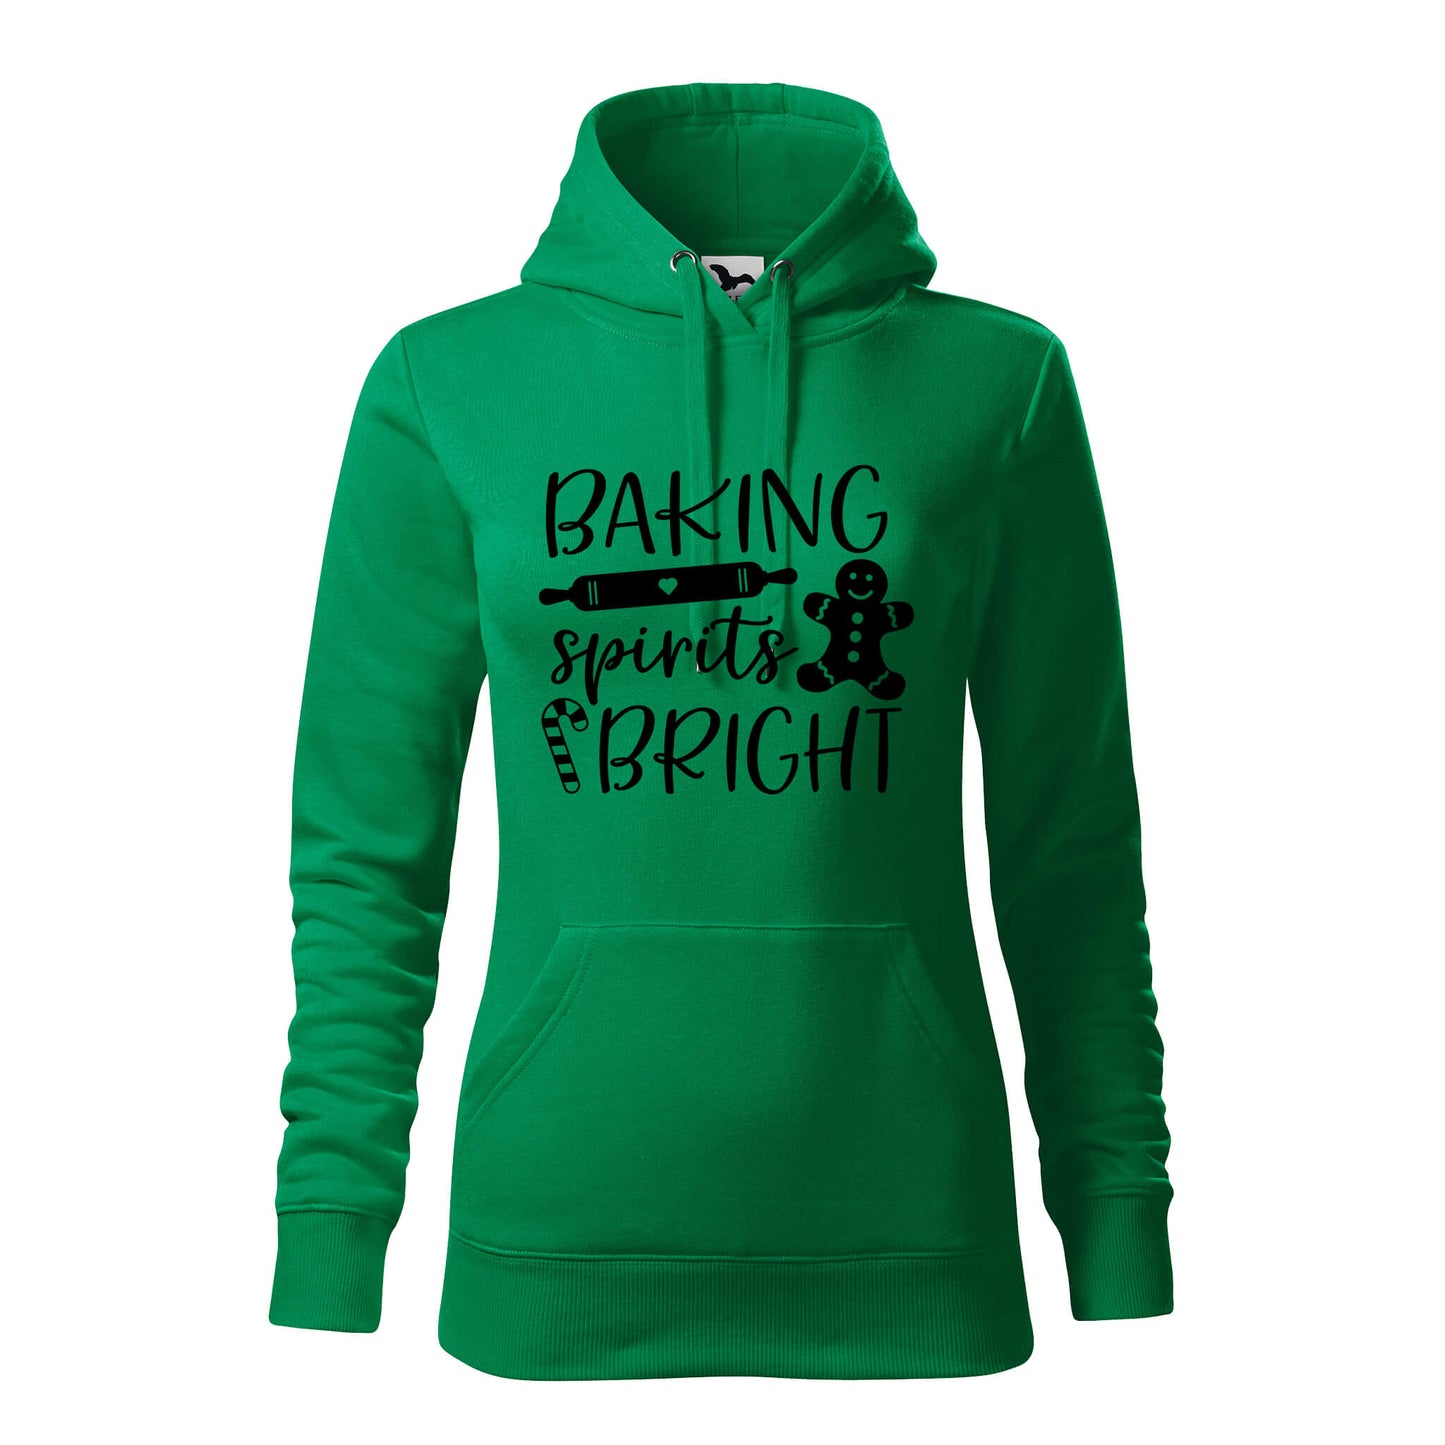 Baking spirits bright hoodie - rvdesignprint